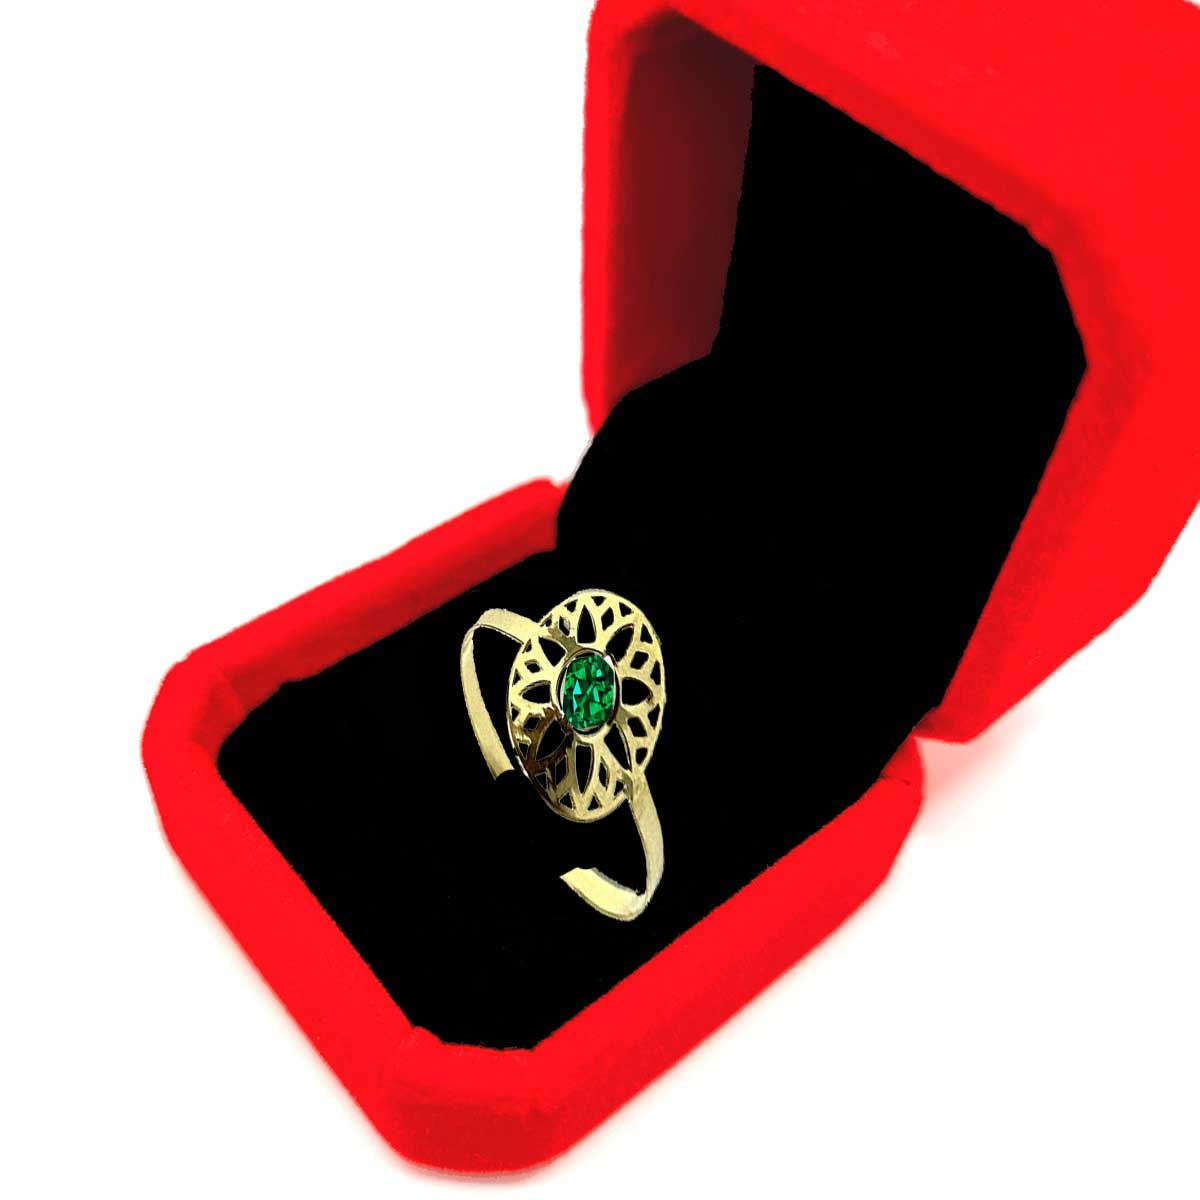 18K Solid Gold Elegant Flower w/ Zircon Stone Design Ring